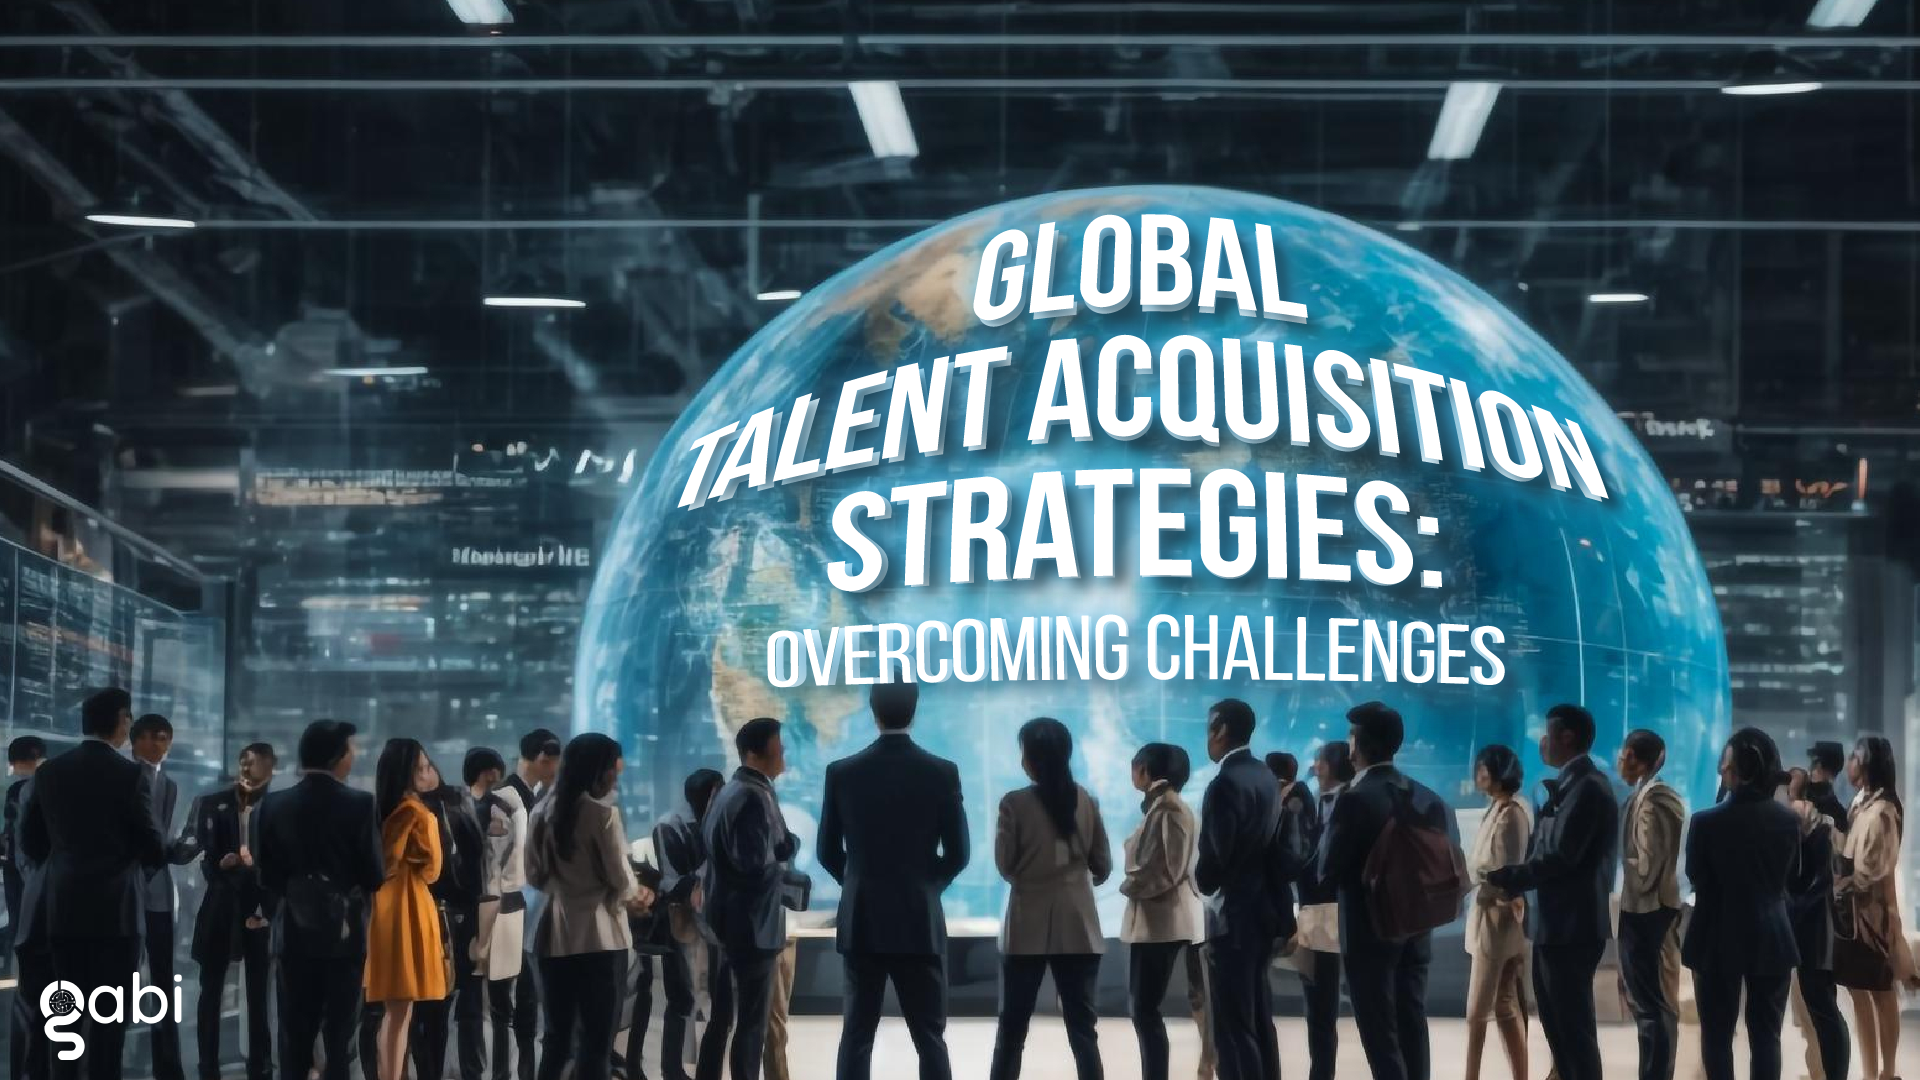 Global Talent Acquisition